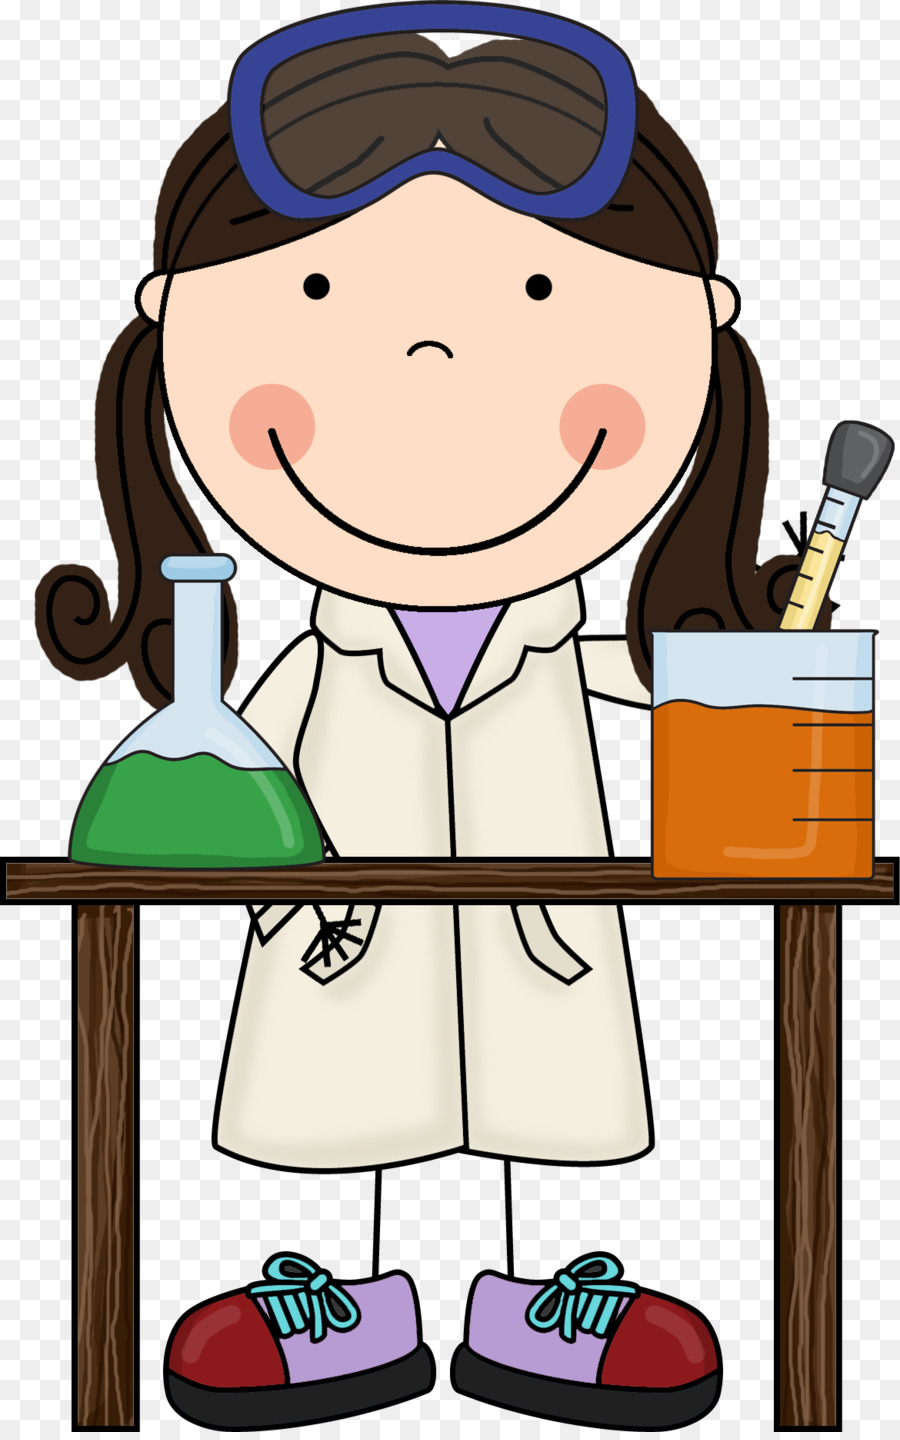 children clipart science